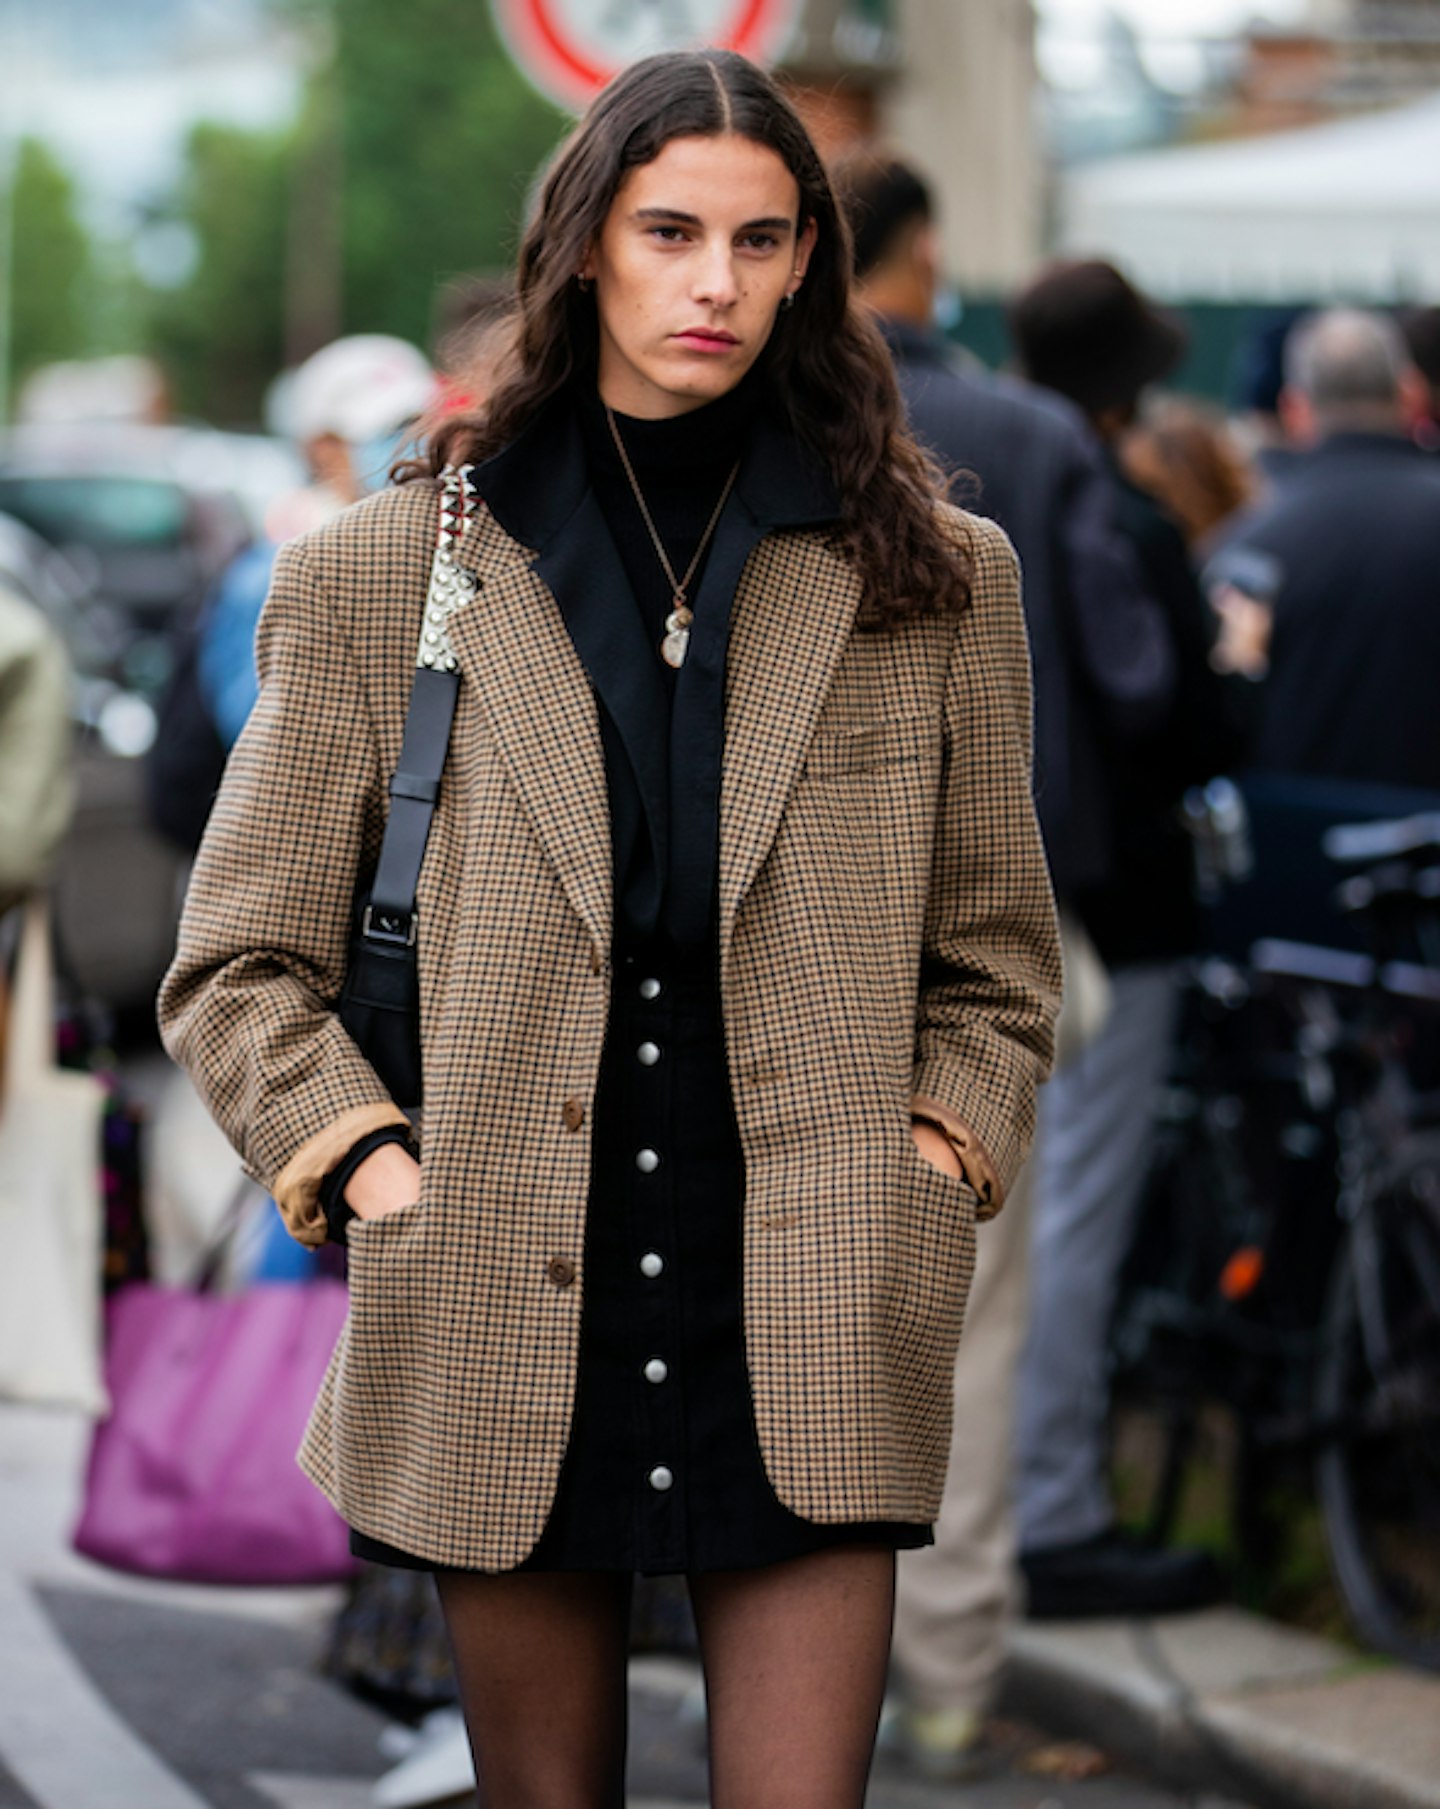 Paris Fashion Week Street Style: All The Best Looks